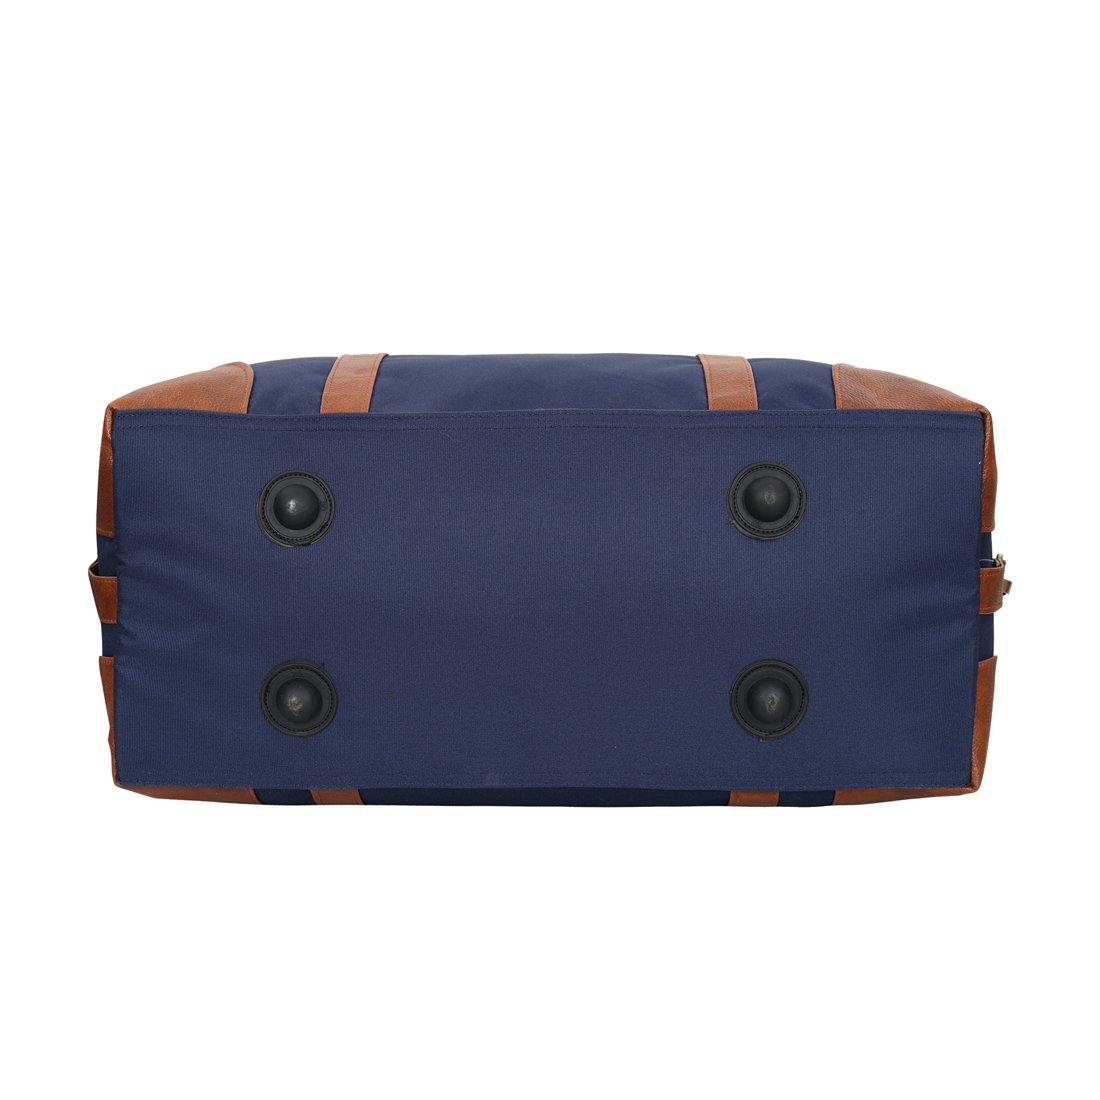 Luxurious Duffel Bag With Leatherette Swatch - Leatherworldonline.net